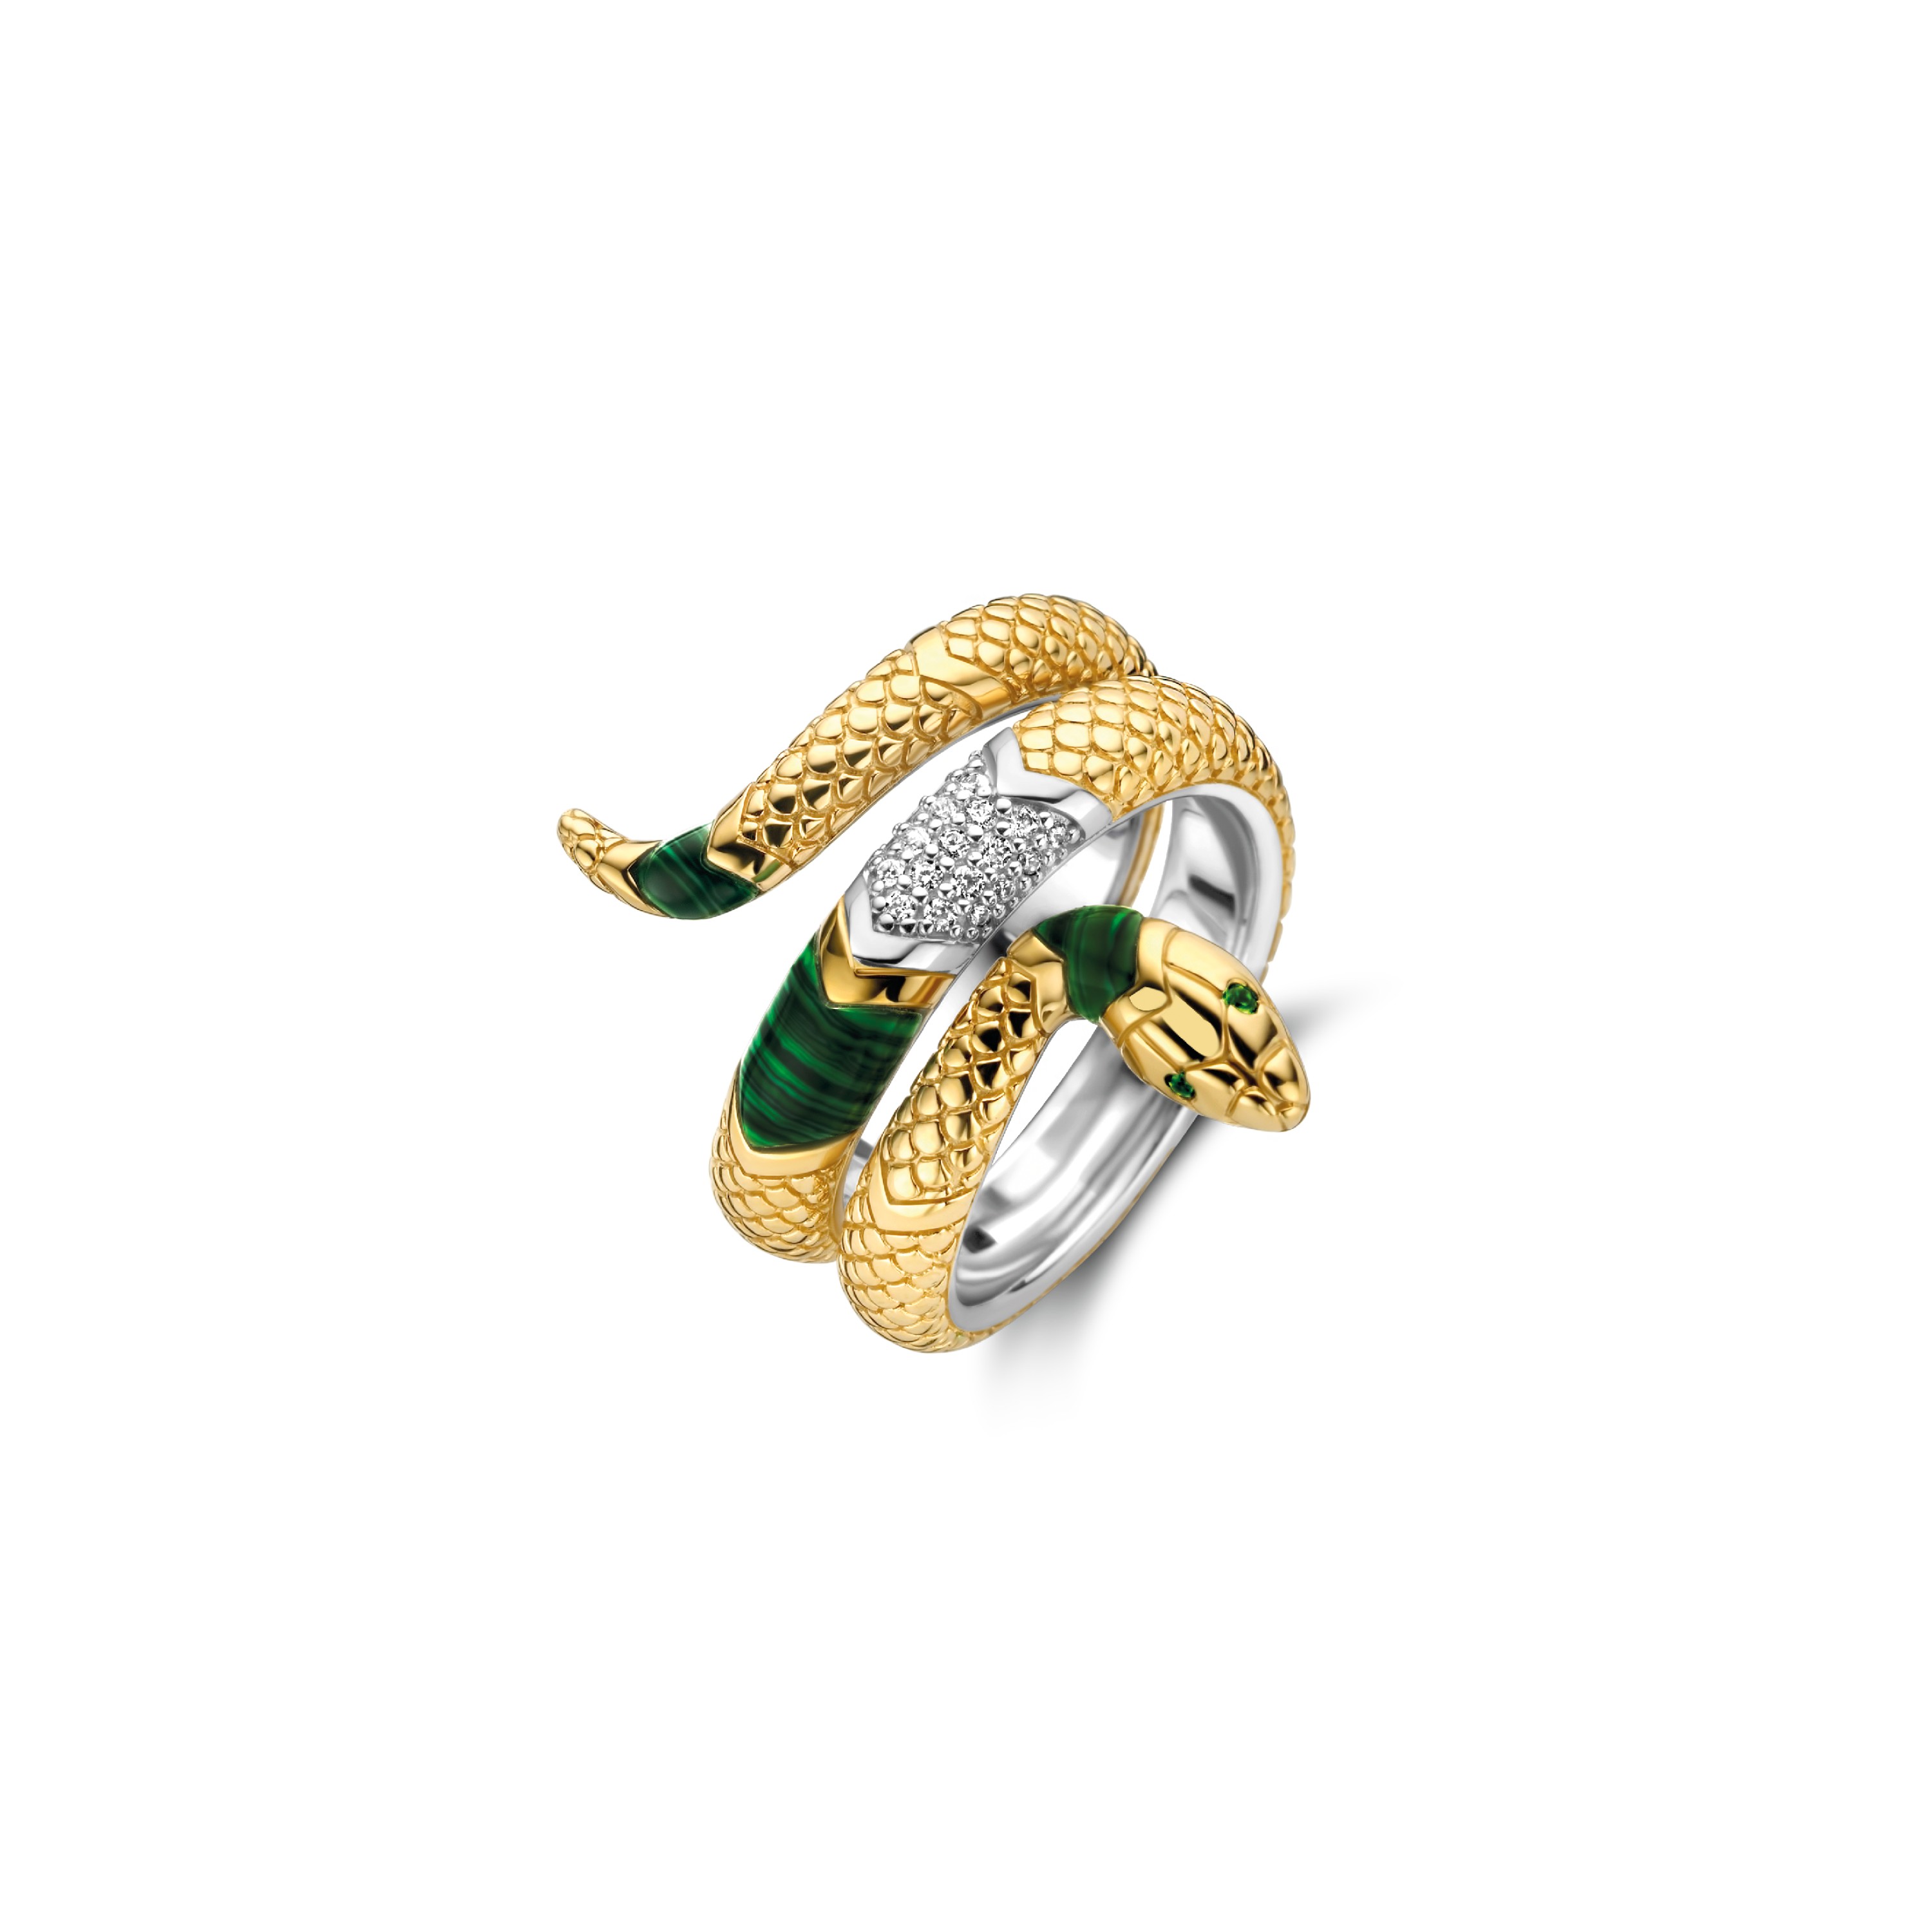 TI SENTO - Milano Ring 12203EM Gala Jewelers Inc. White Oak, PA